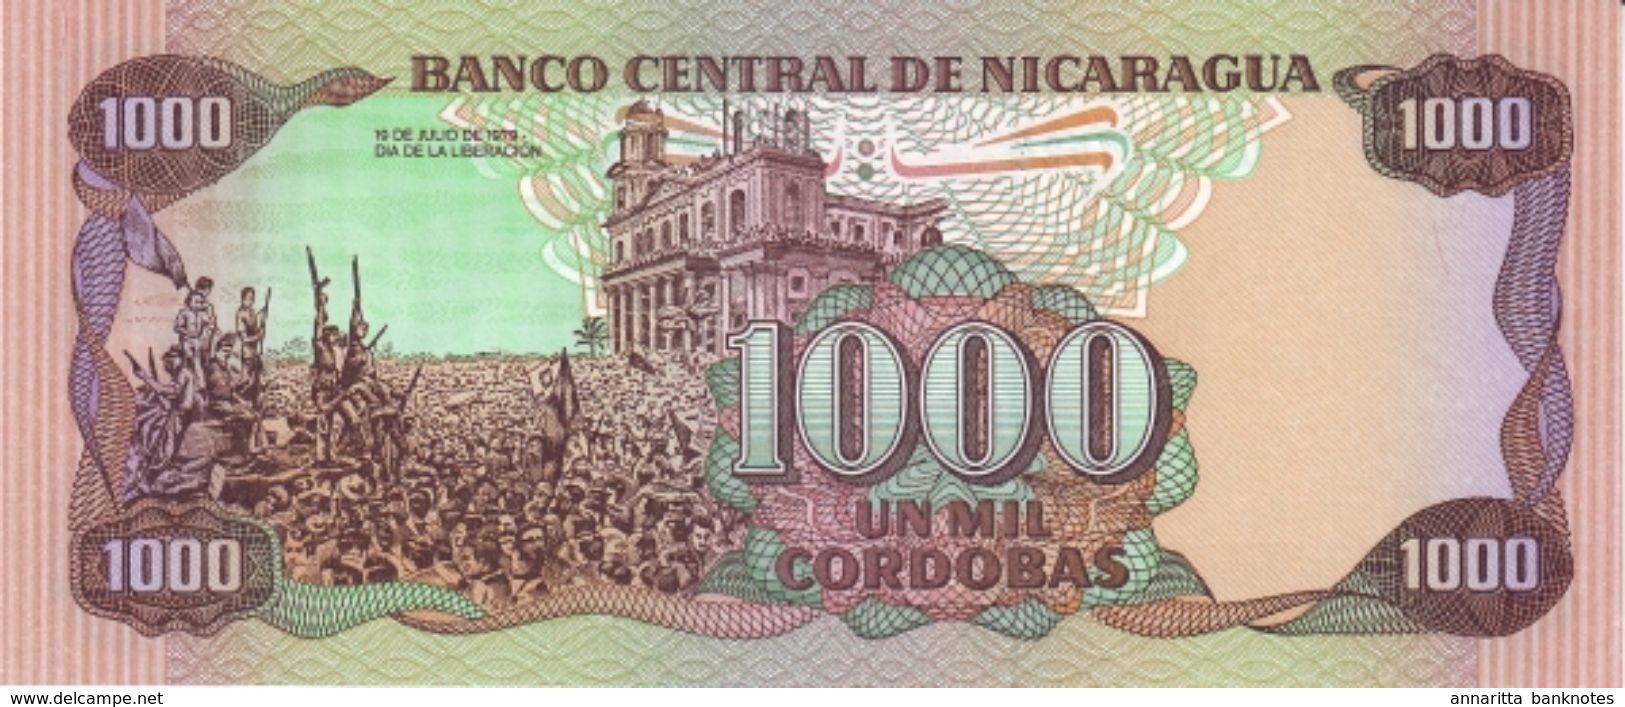 NICARAGUA 1000 CÓRDOBAS 1985 P-156b UNC WITHOUT WATERMARK [NI450b] - Nicaragua